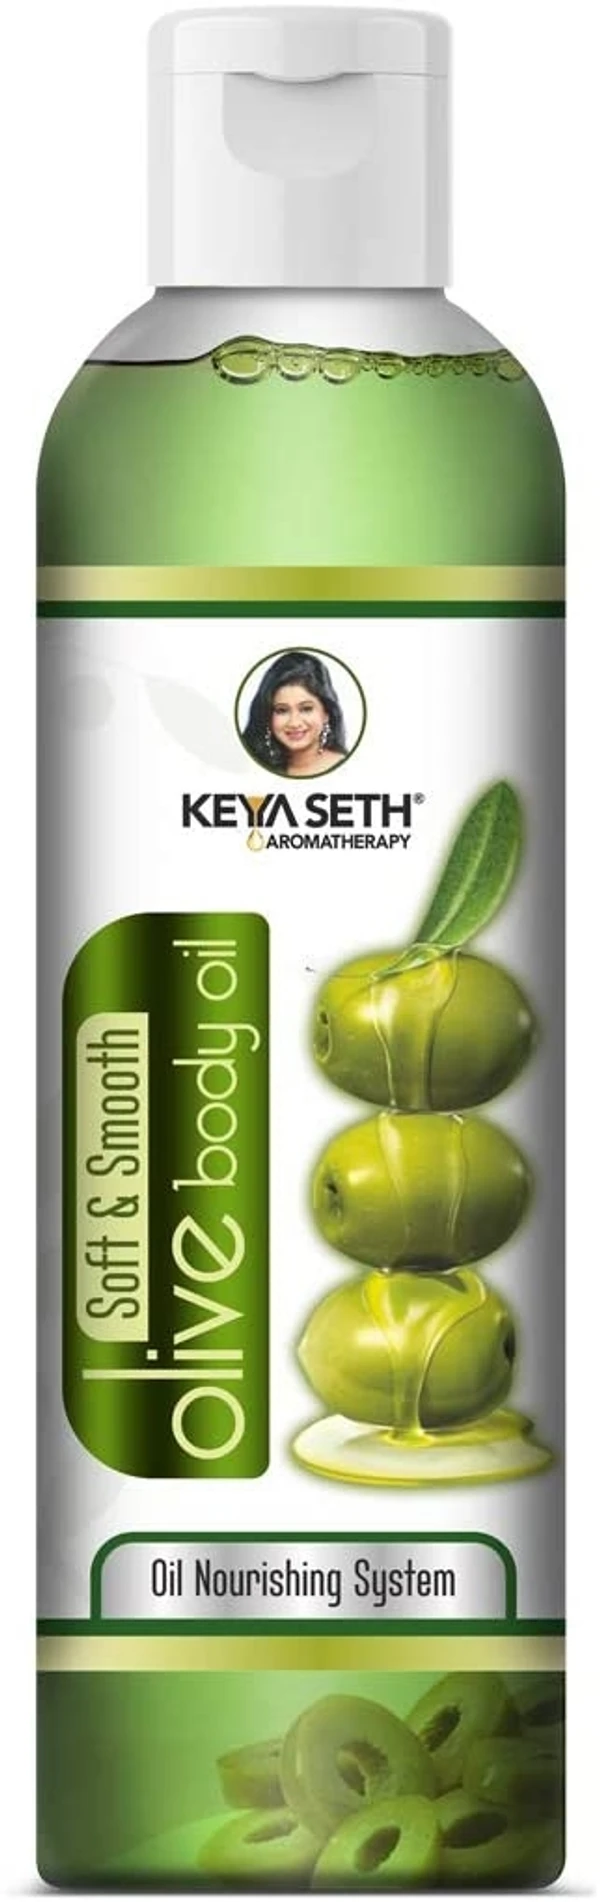 Keya Seth Aromatherapy Soft & Smooth Fairness Body Oil with Pure Olive, Sandalwood, Almond & Saffron by Keya Seth Aromatherapy, 200ml